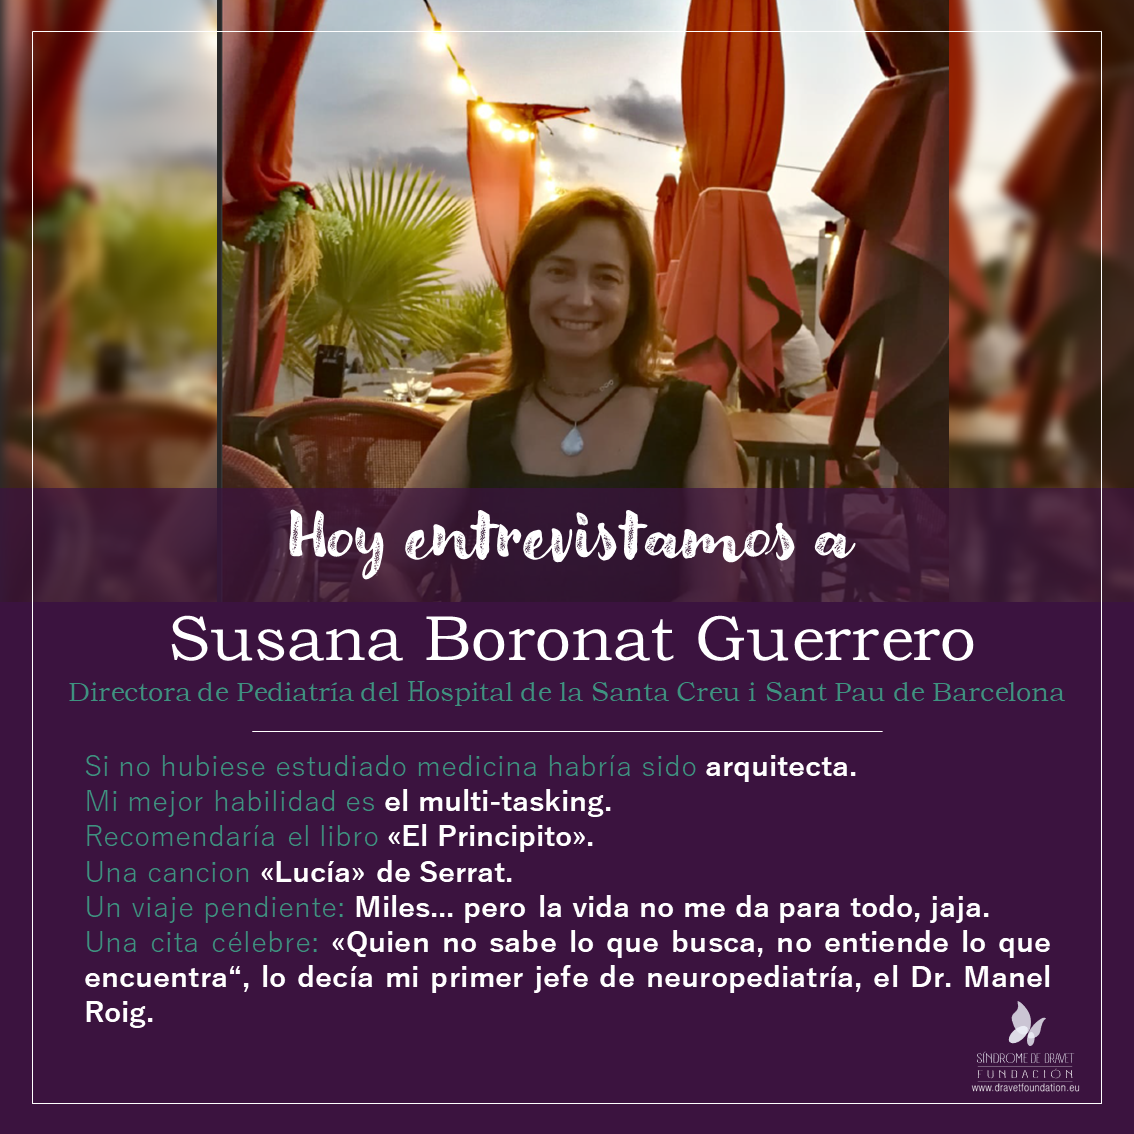 Entrevistamos a Susana Boronat Guerrero